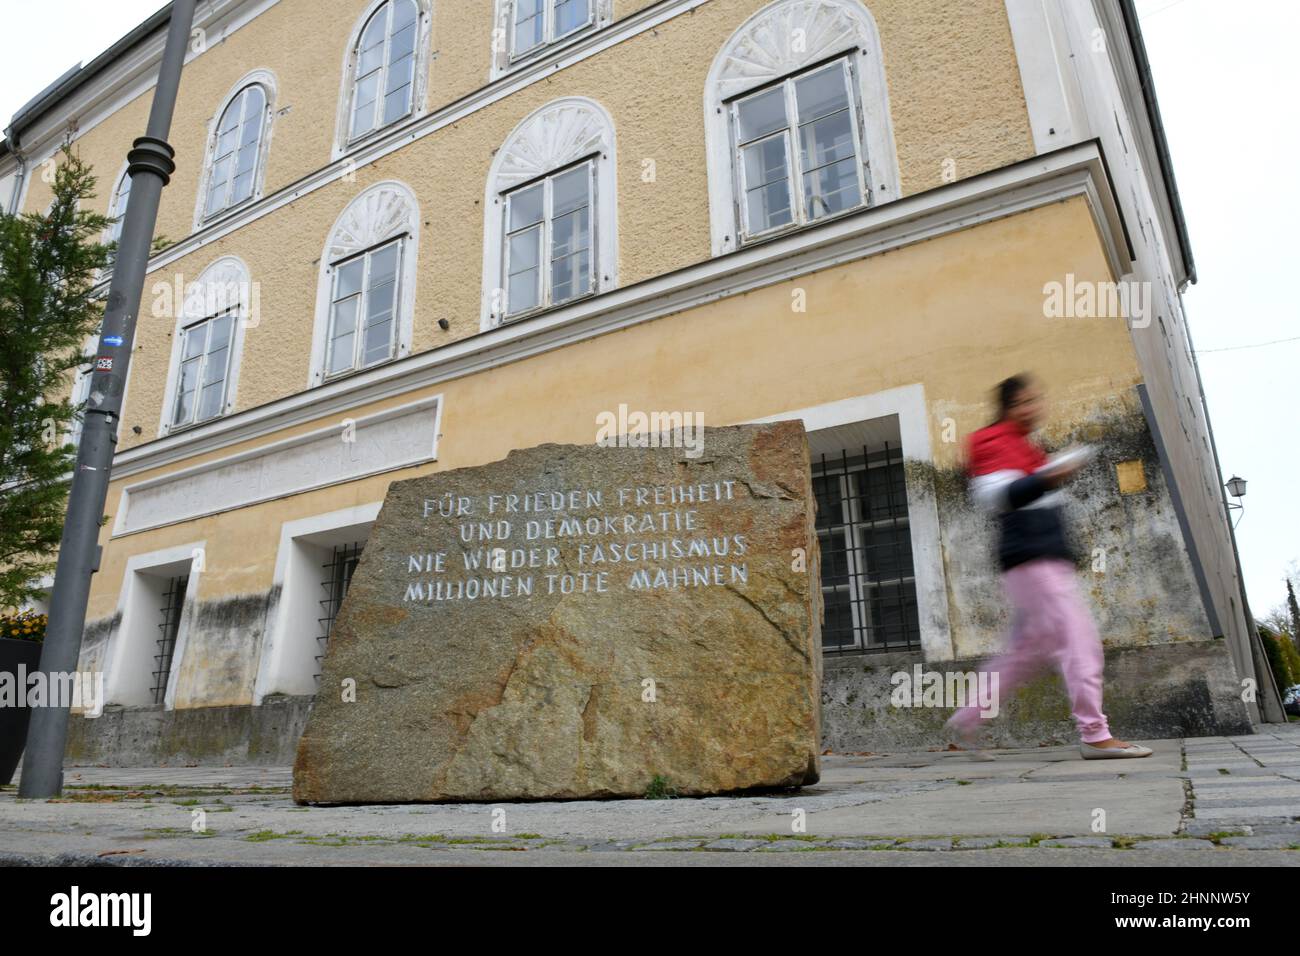 Mahnmal vor dem Hitler-Geburtshaus in Baunau am Inn, Österreich, Europa - Memorial in front of the house where Hitler was born in Braunau am Inn, Austria, Europe Stock Photo